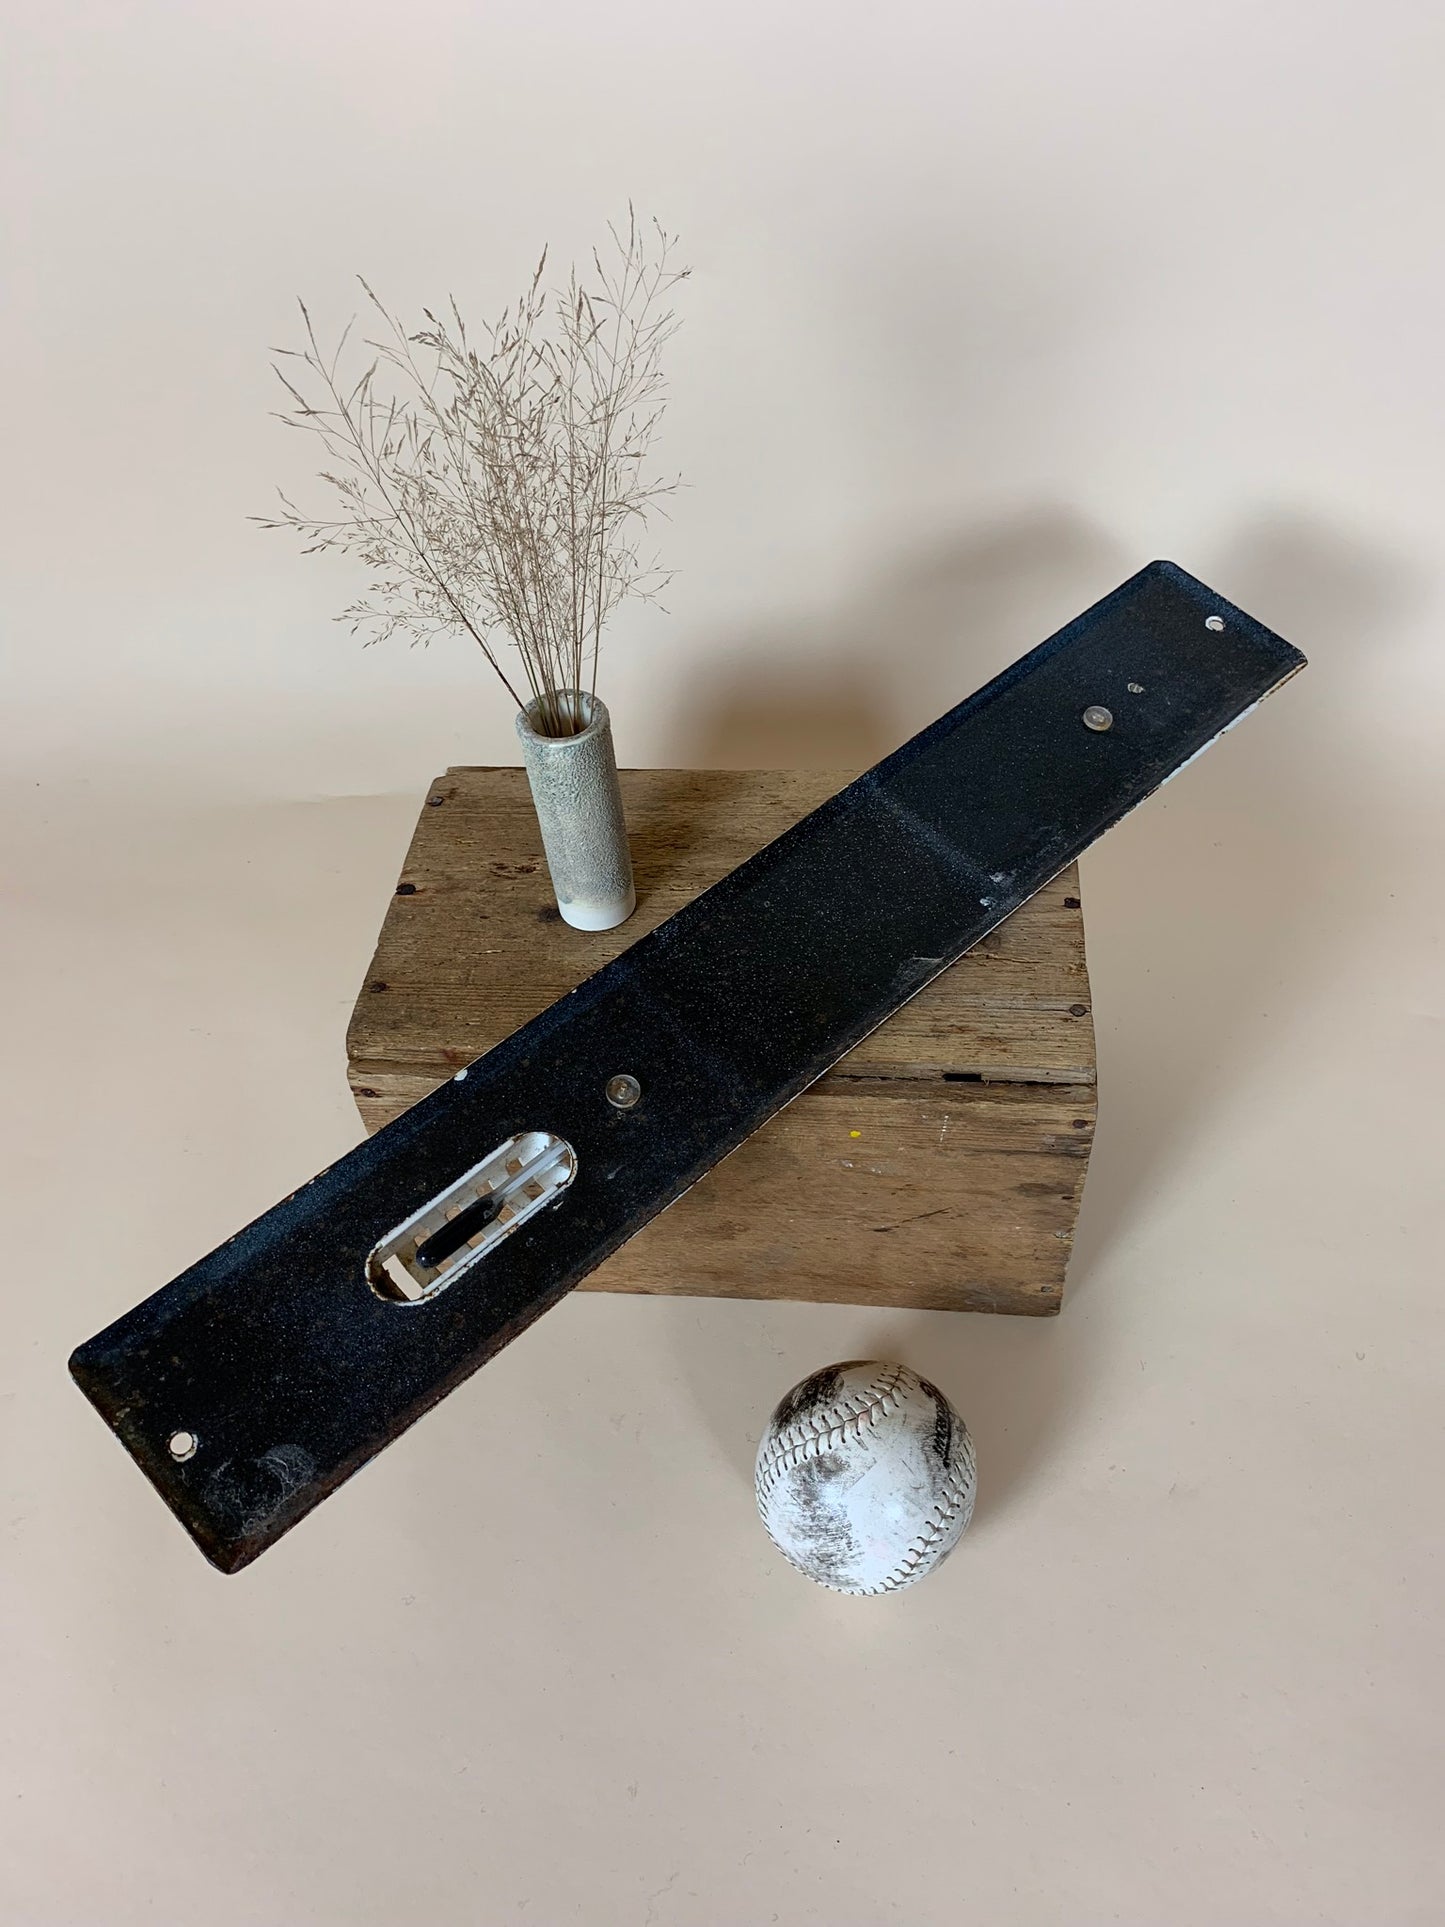 Schönes altes Emaille-Thermometer